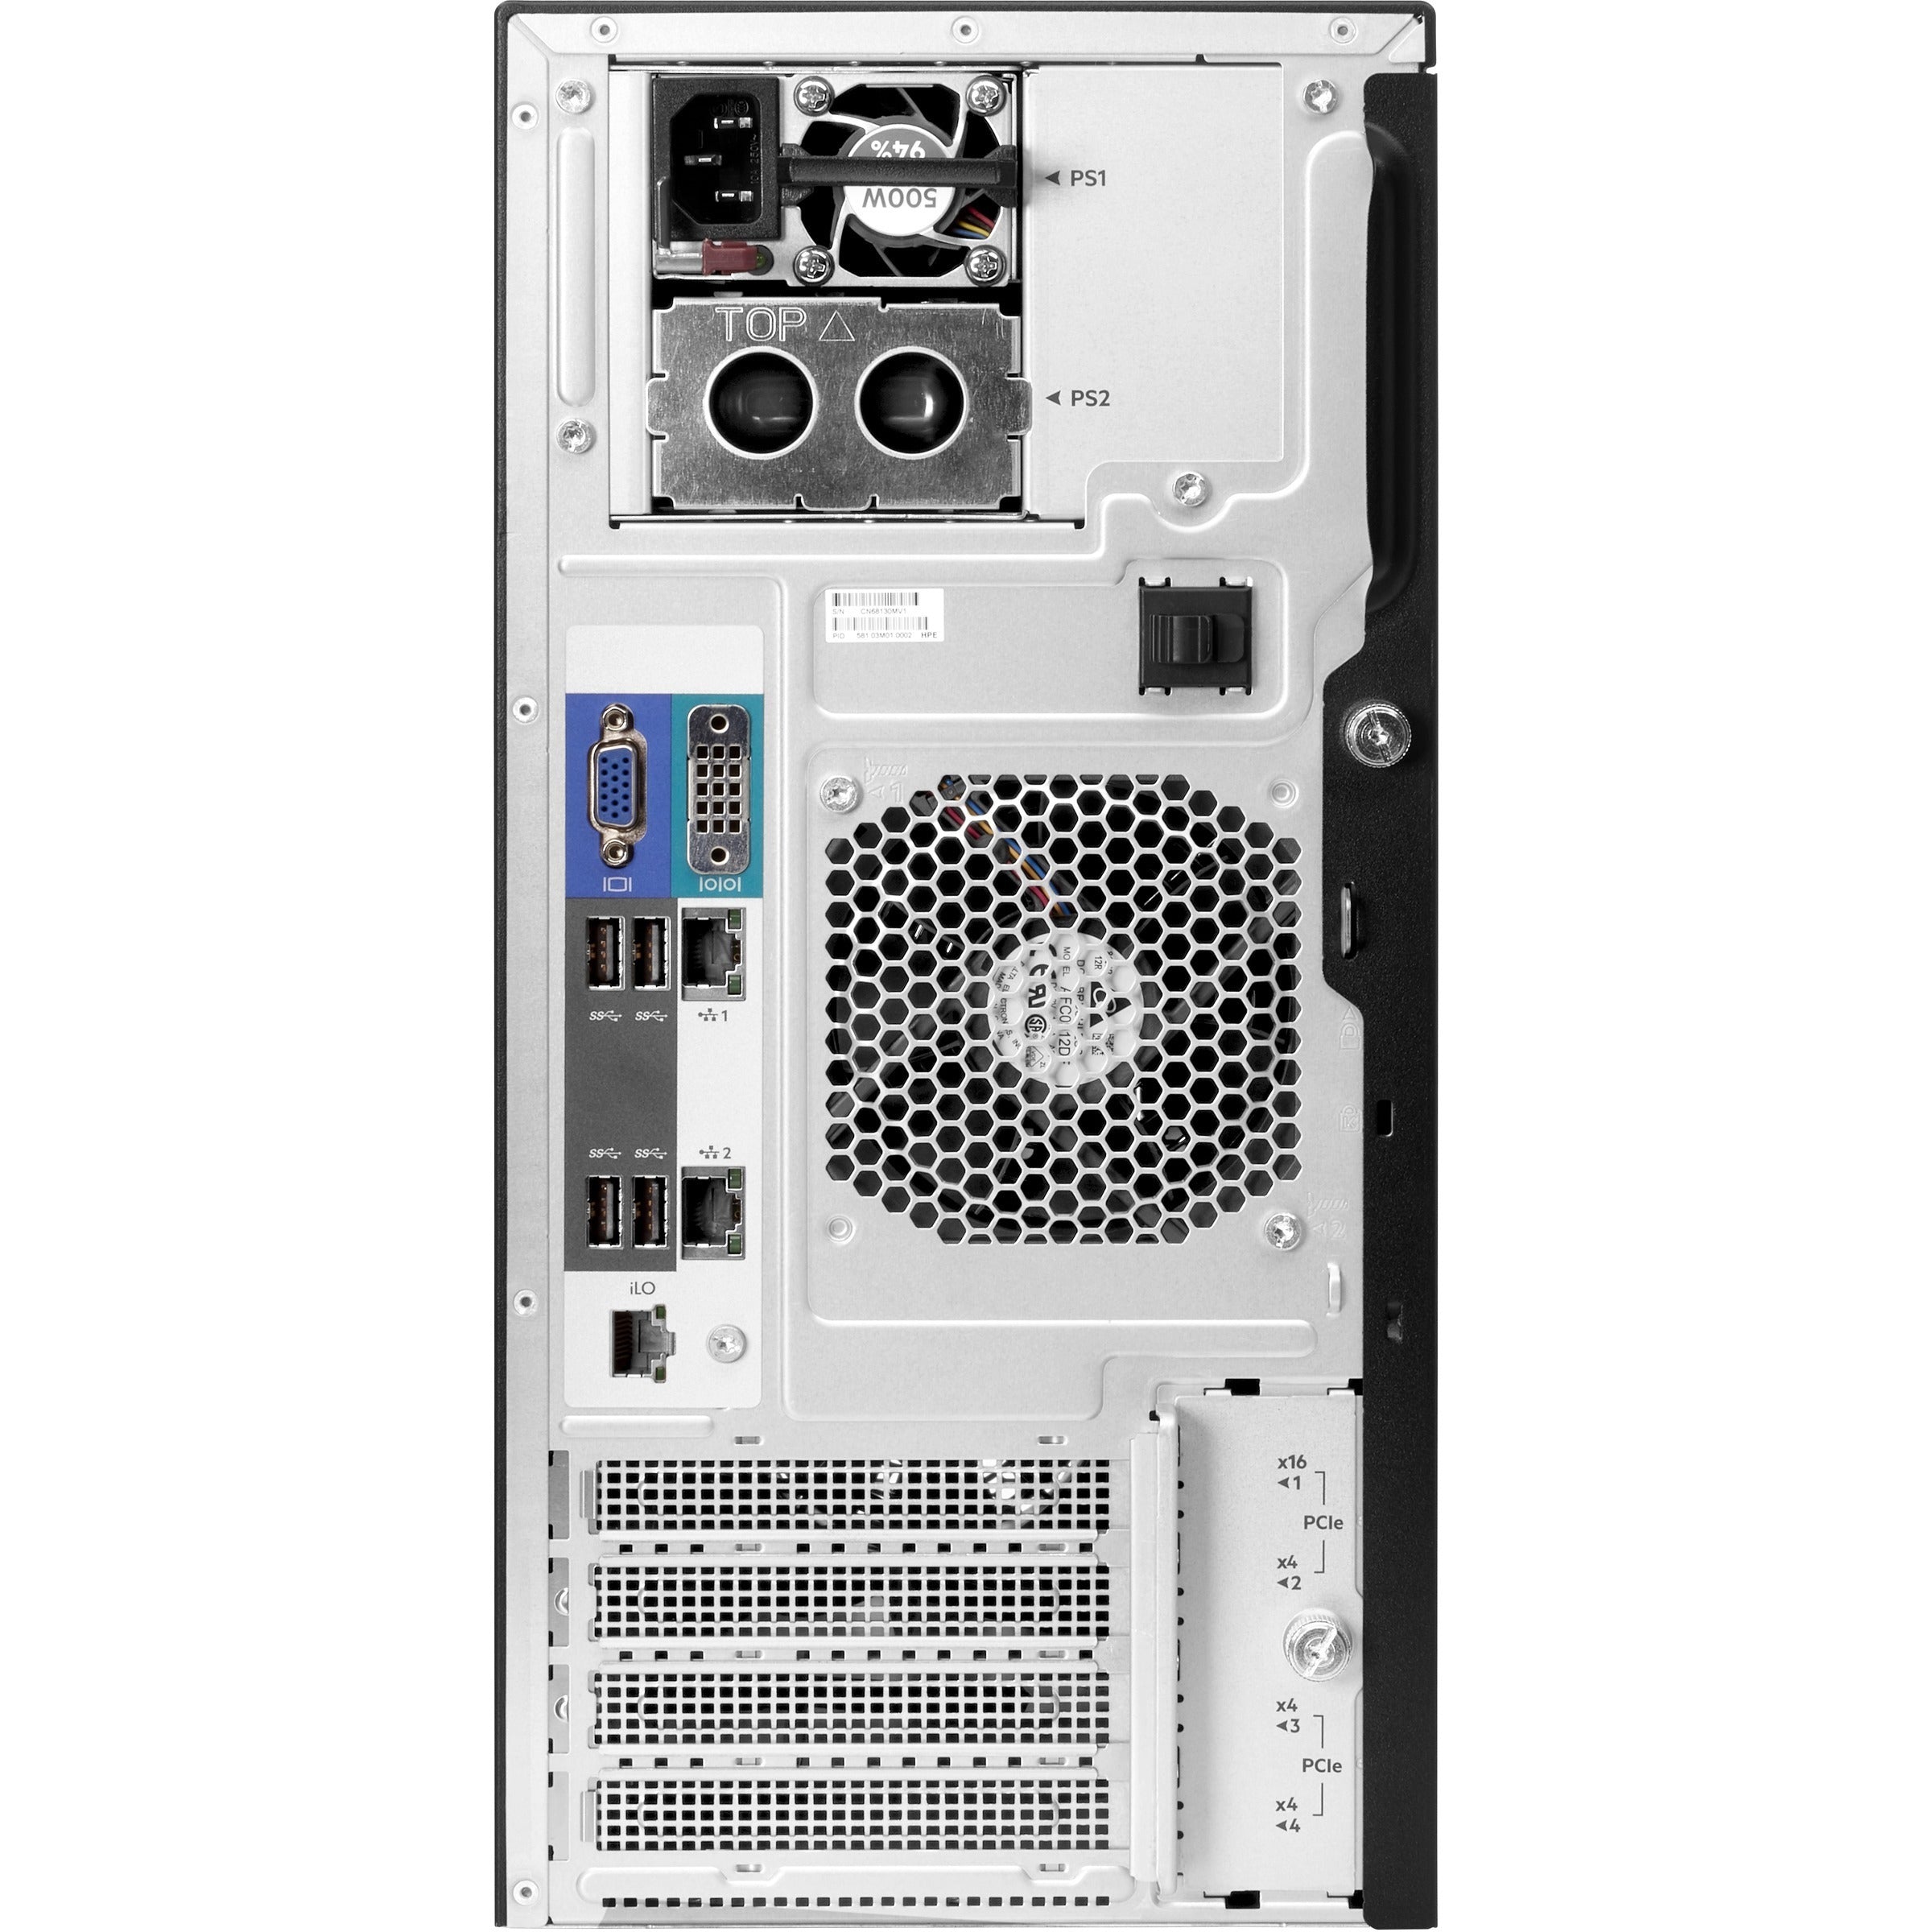 HPE ProLiant ML30 G10 4U Tower Server - 1 x Intel Xeon E-2234 3.60 GHz - 16 GB RAM - Serial ATA/600 Controller